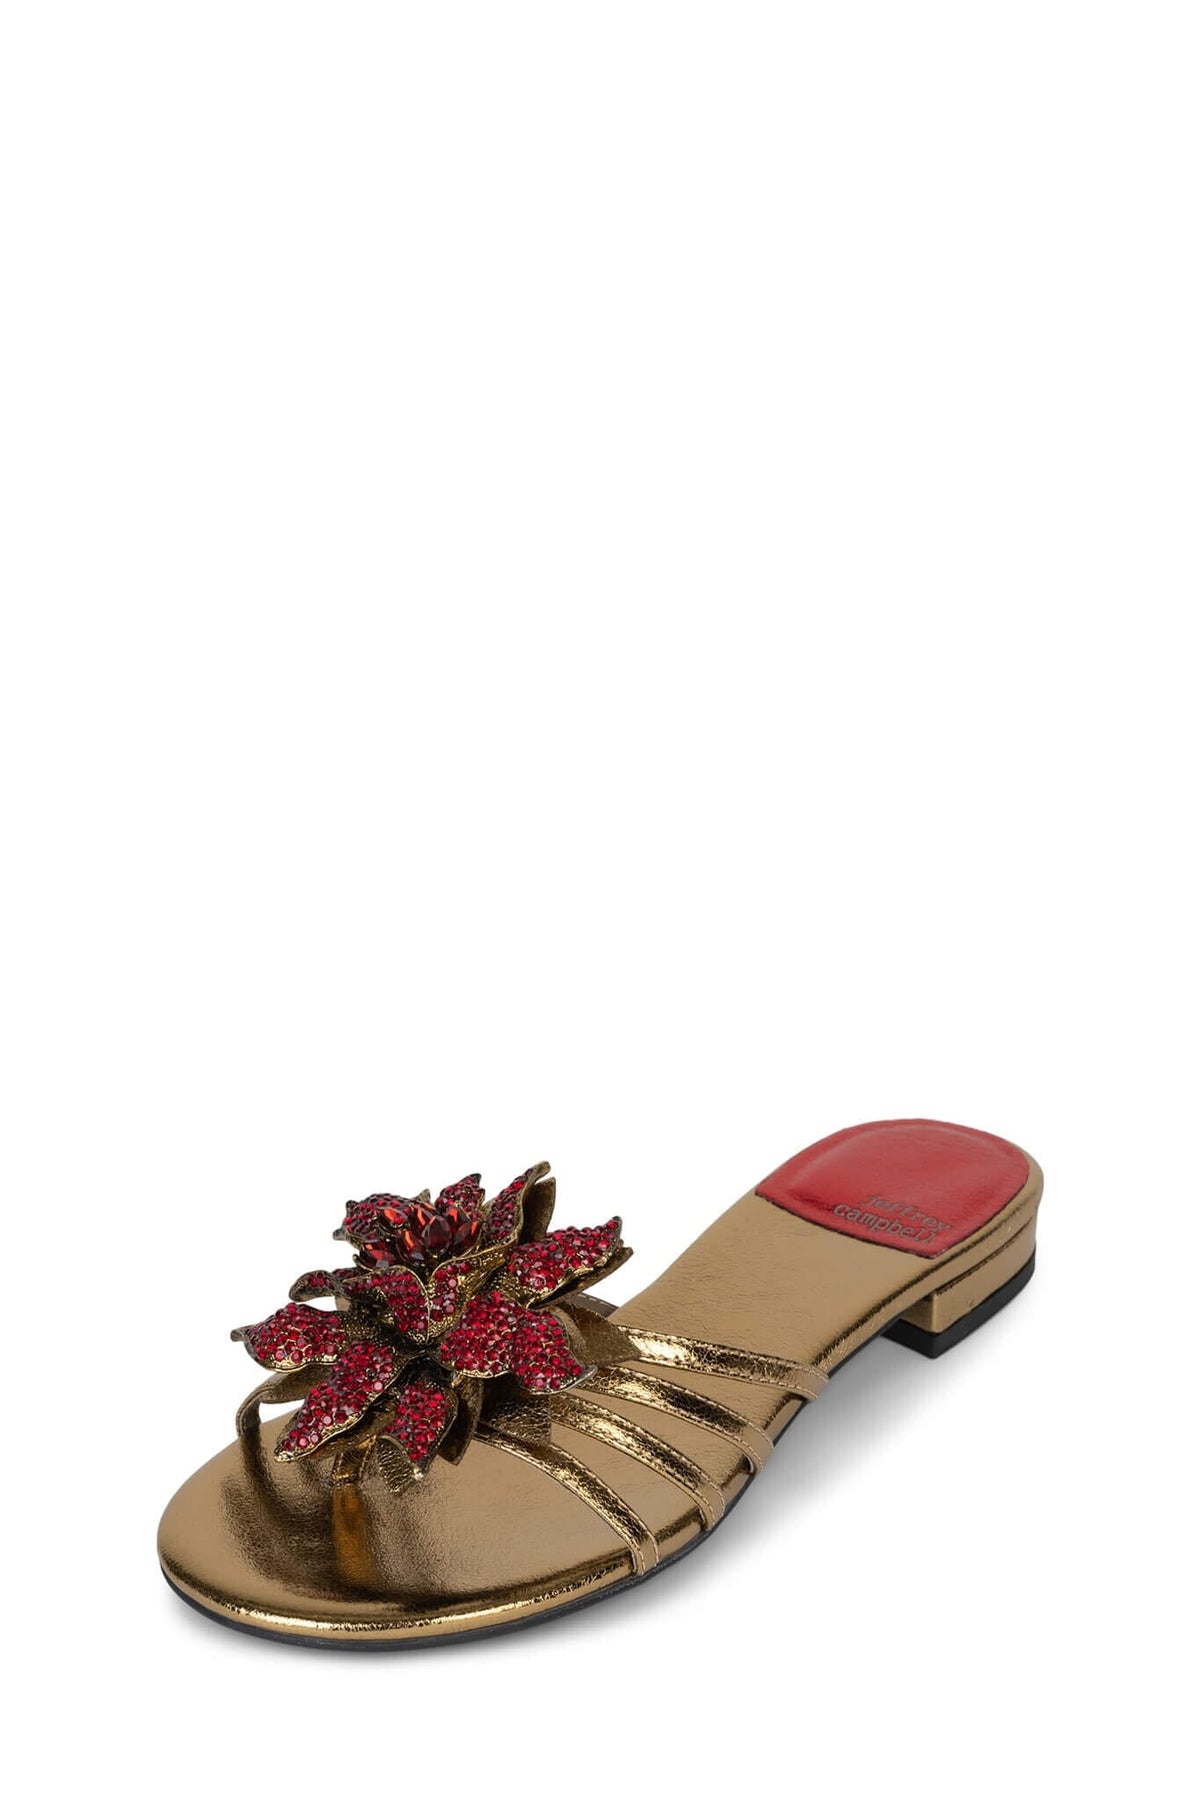 ENCHANTED Jeffrey Campbell Flat Sandals Dark Gold Red